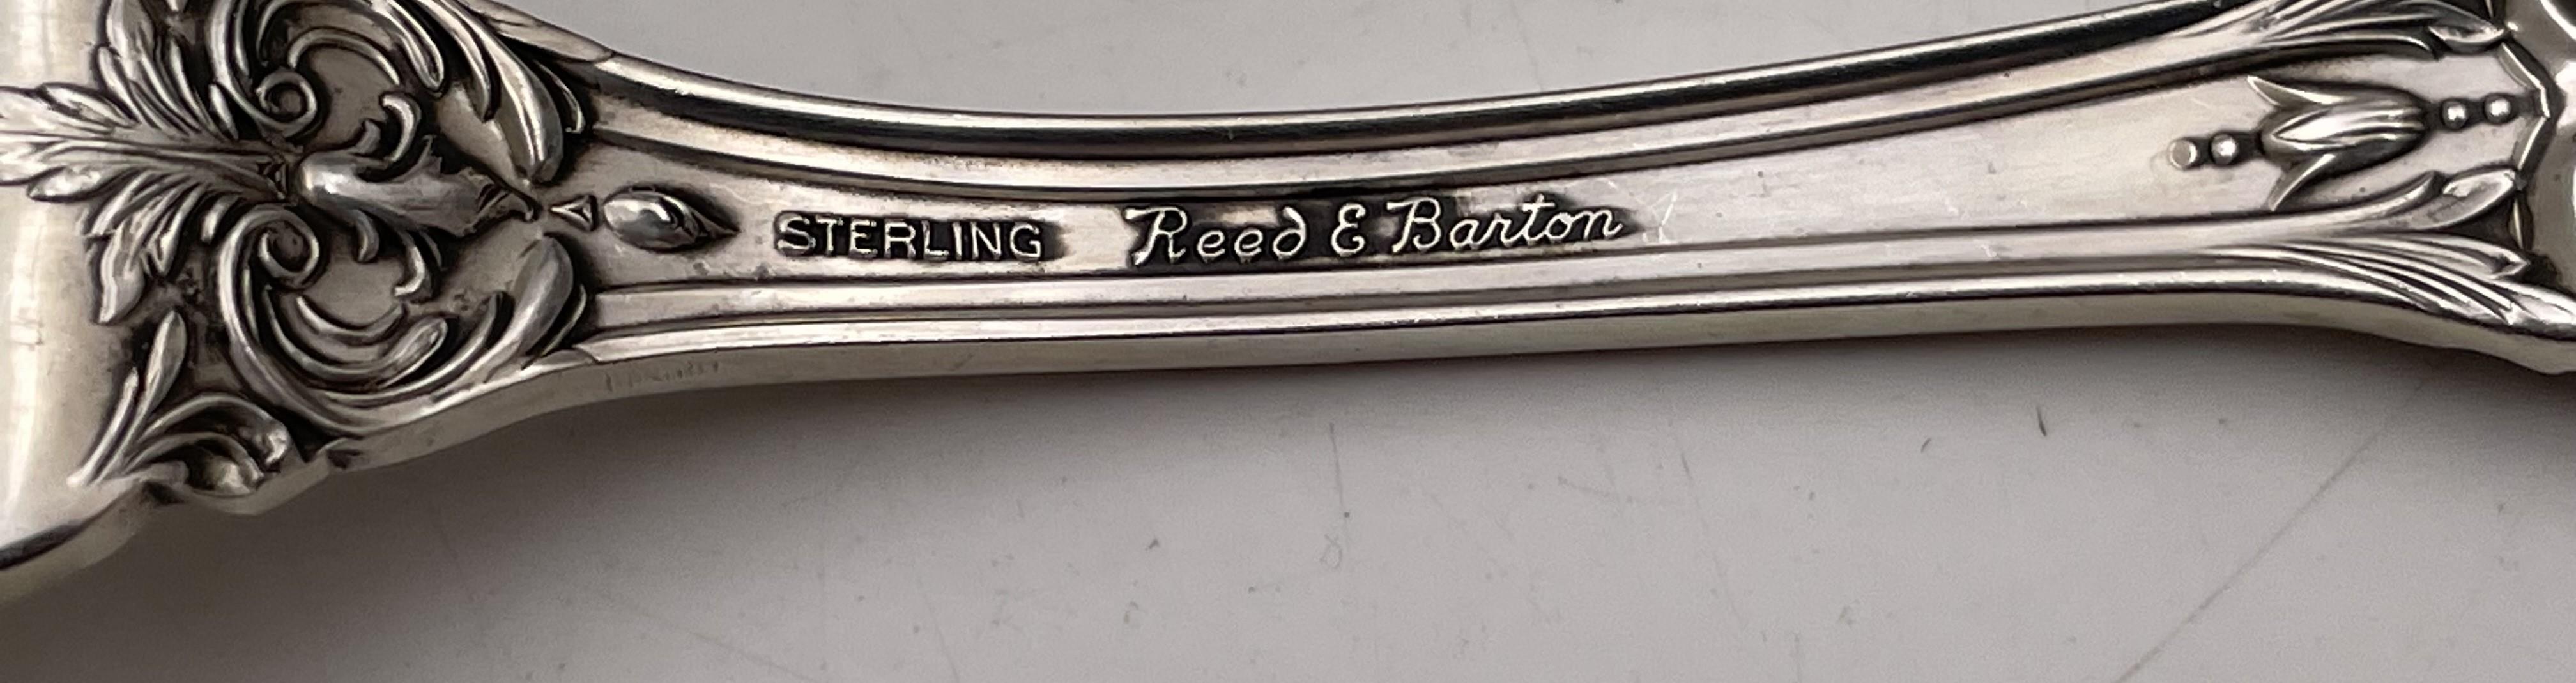 Reed & Barton Sterling Silver 90-Piece Francis I Flatware Set Art Nouveau Style For Sale 2